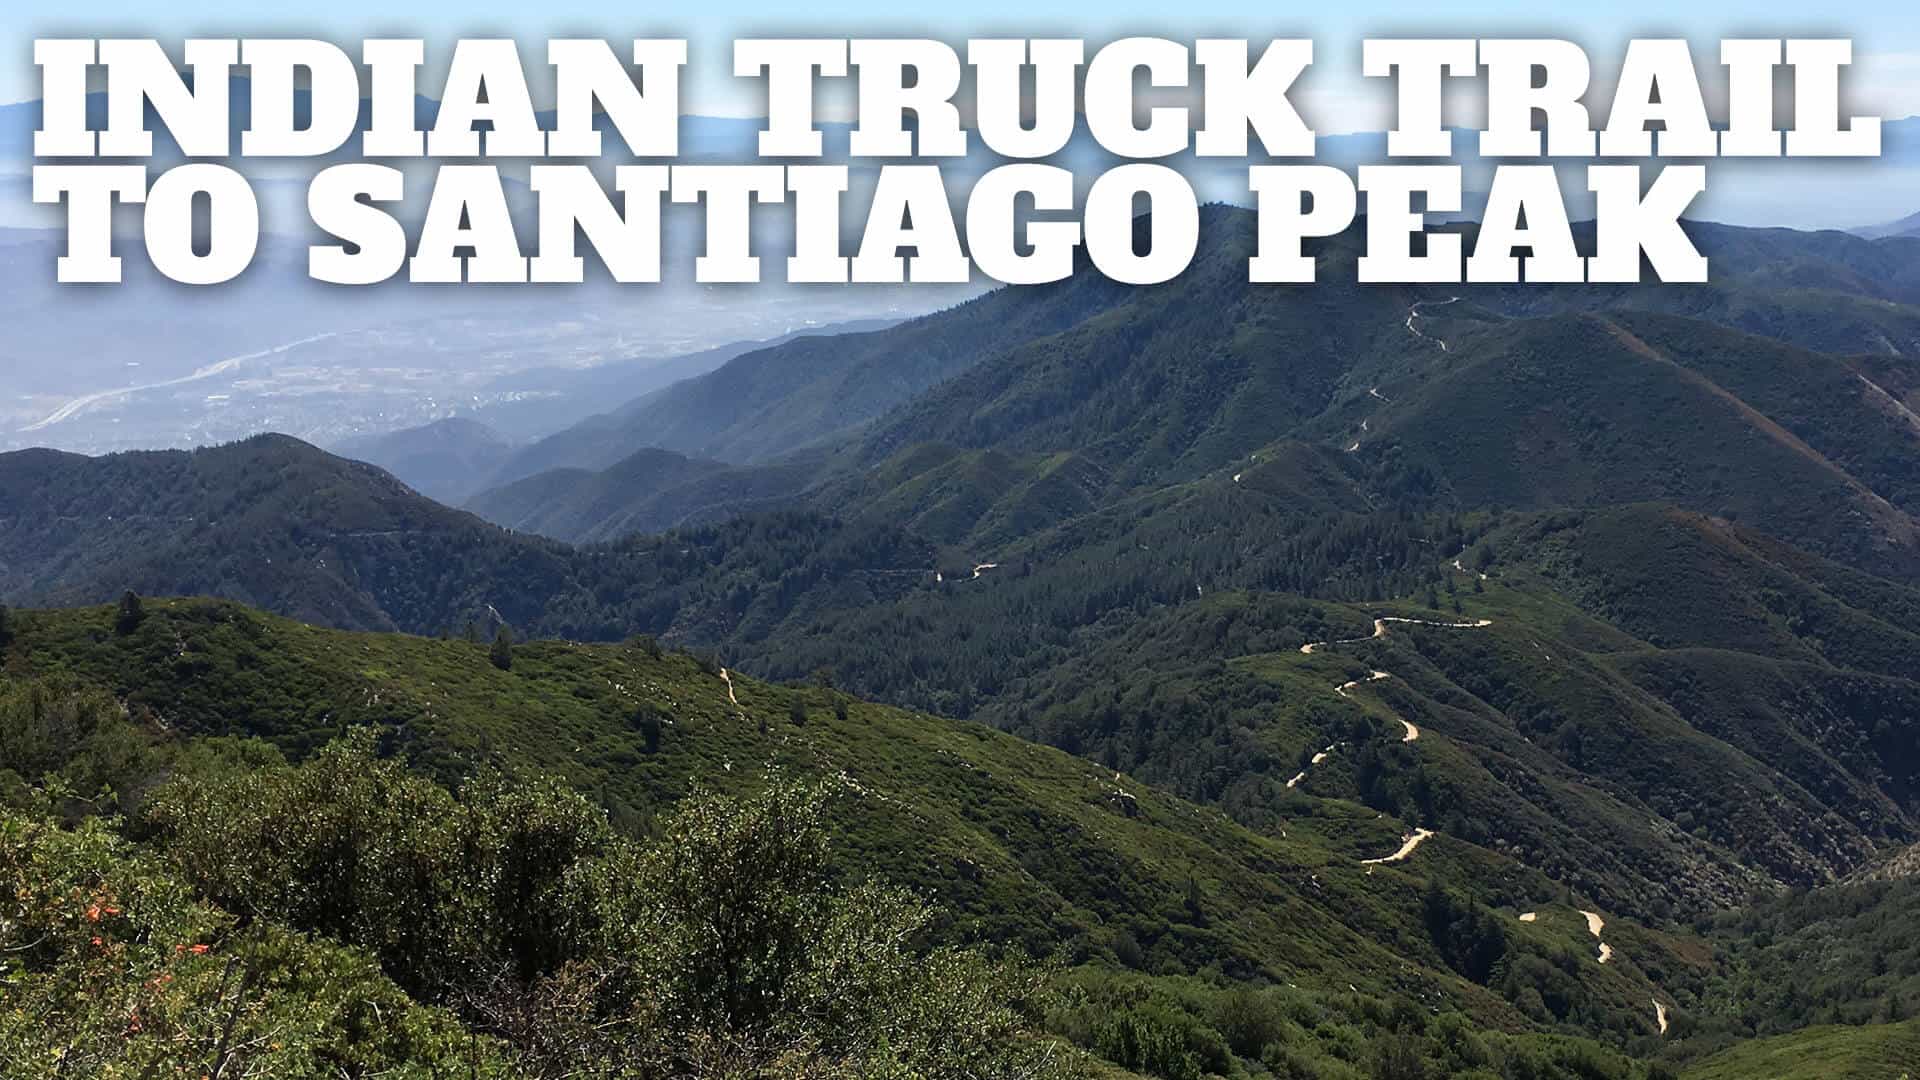 Hike Indian Truck Trail to Santiago Peak